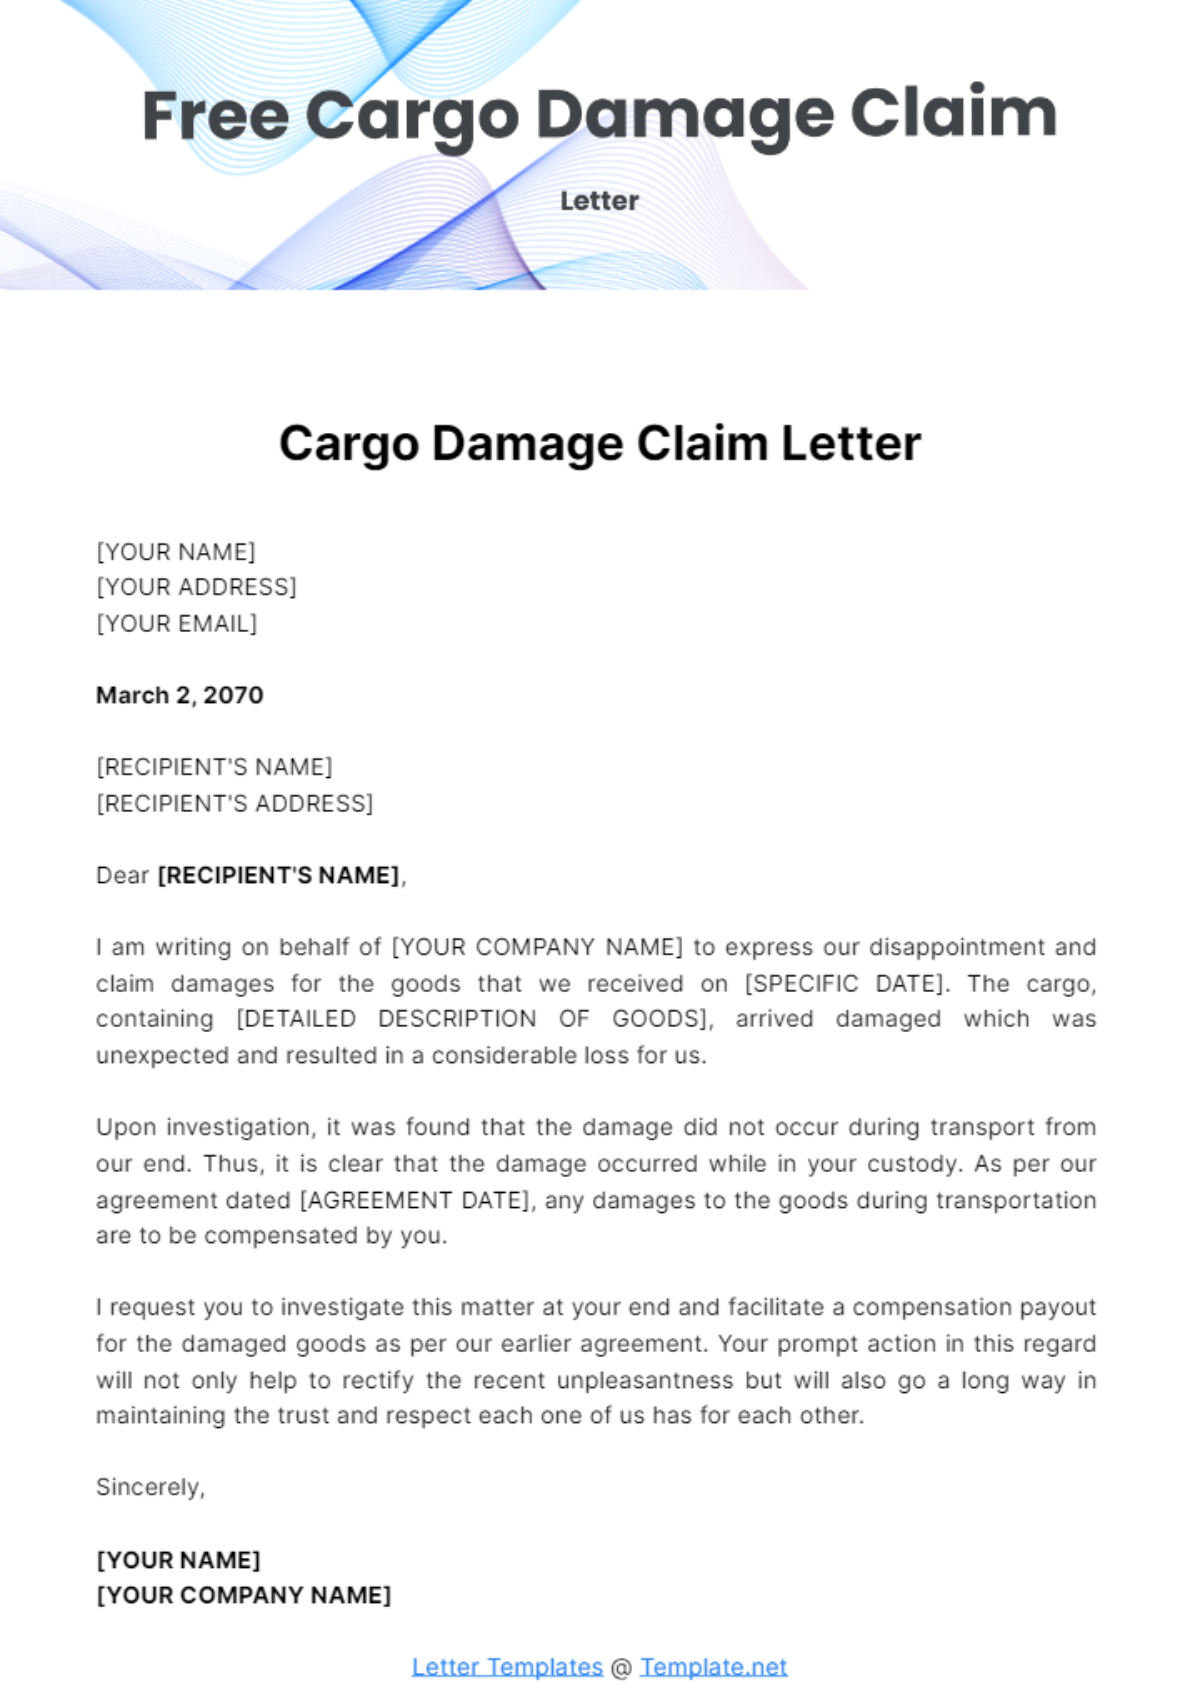 Cargo Damage Claim Letter Template